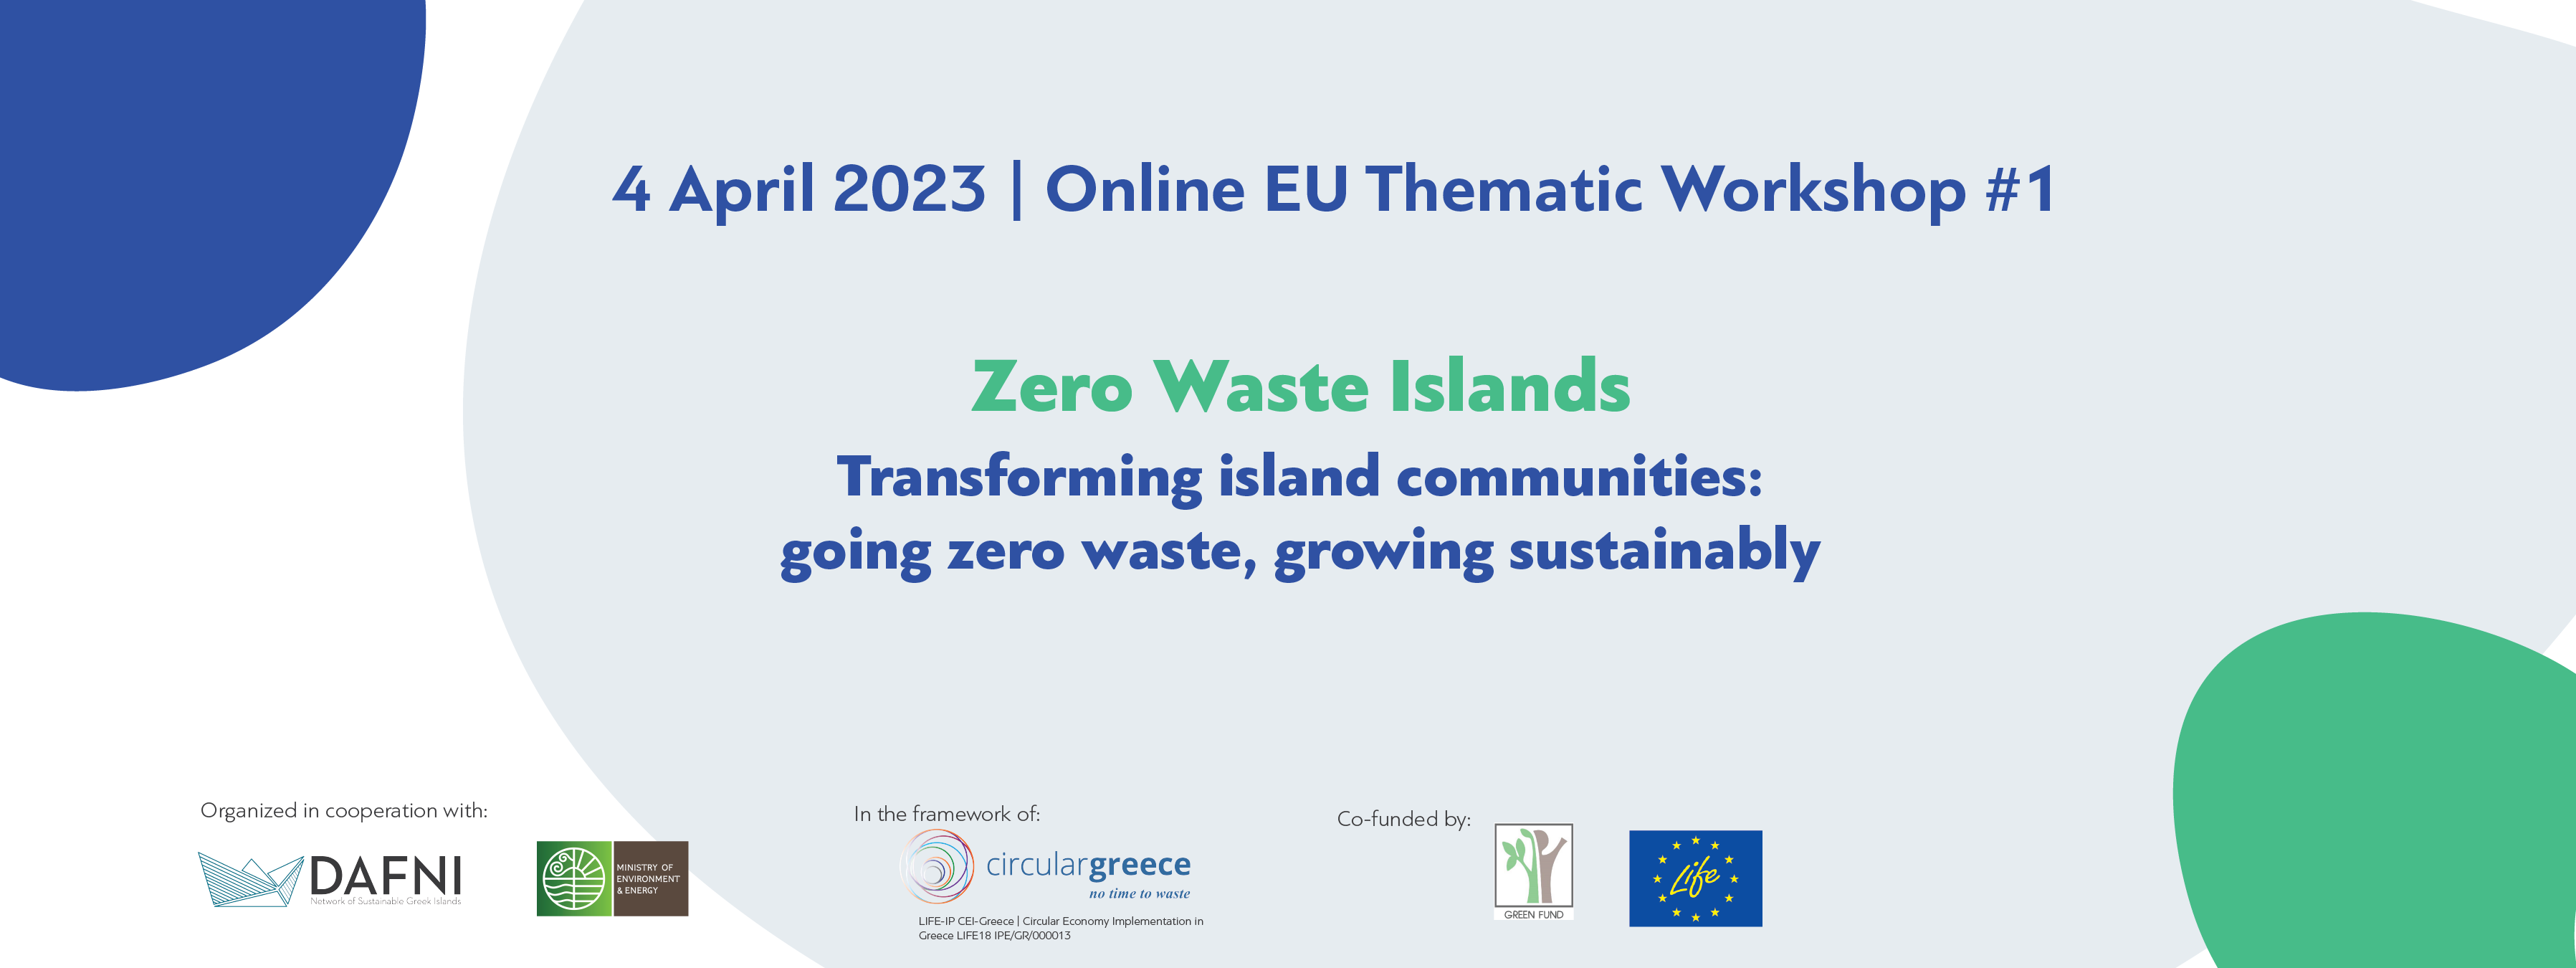 1st EU thematic workshop “Zero Waste Islands” | Presentations